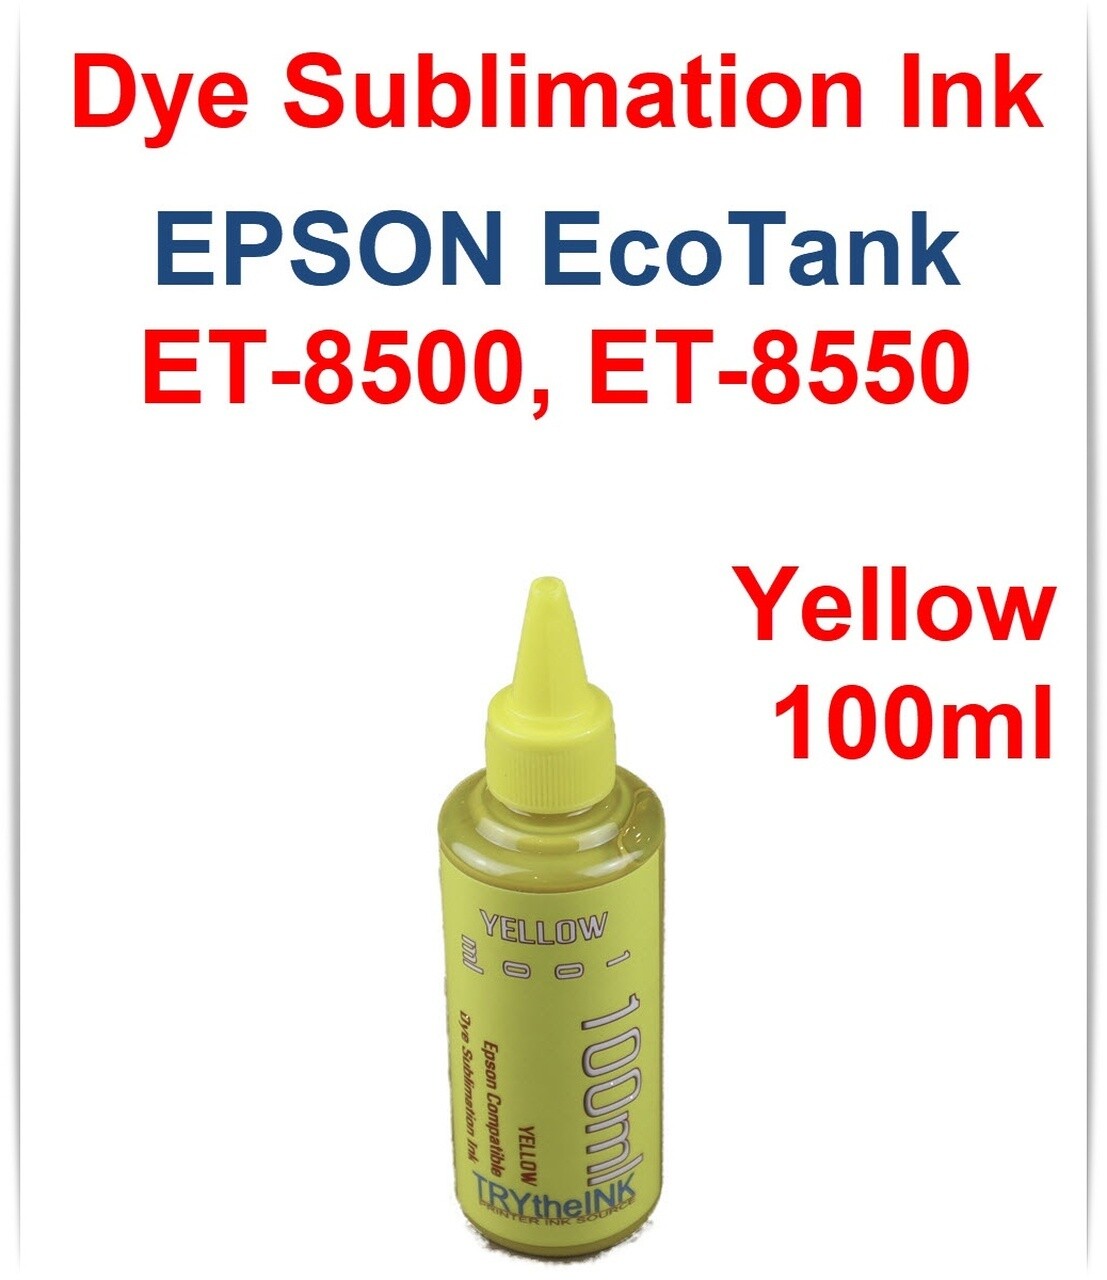 Yellow Dye Sublimation Ink 100ml bottle for EPSON EcoTank ET-8500 ET-8550 printers